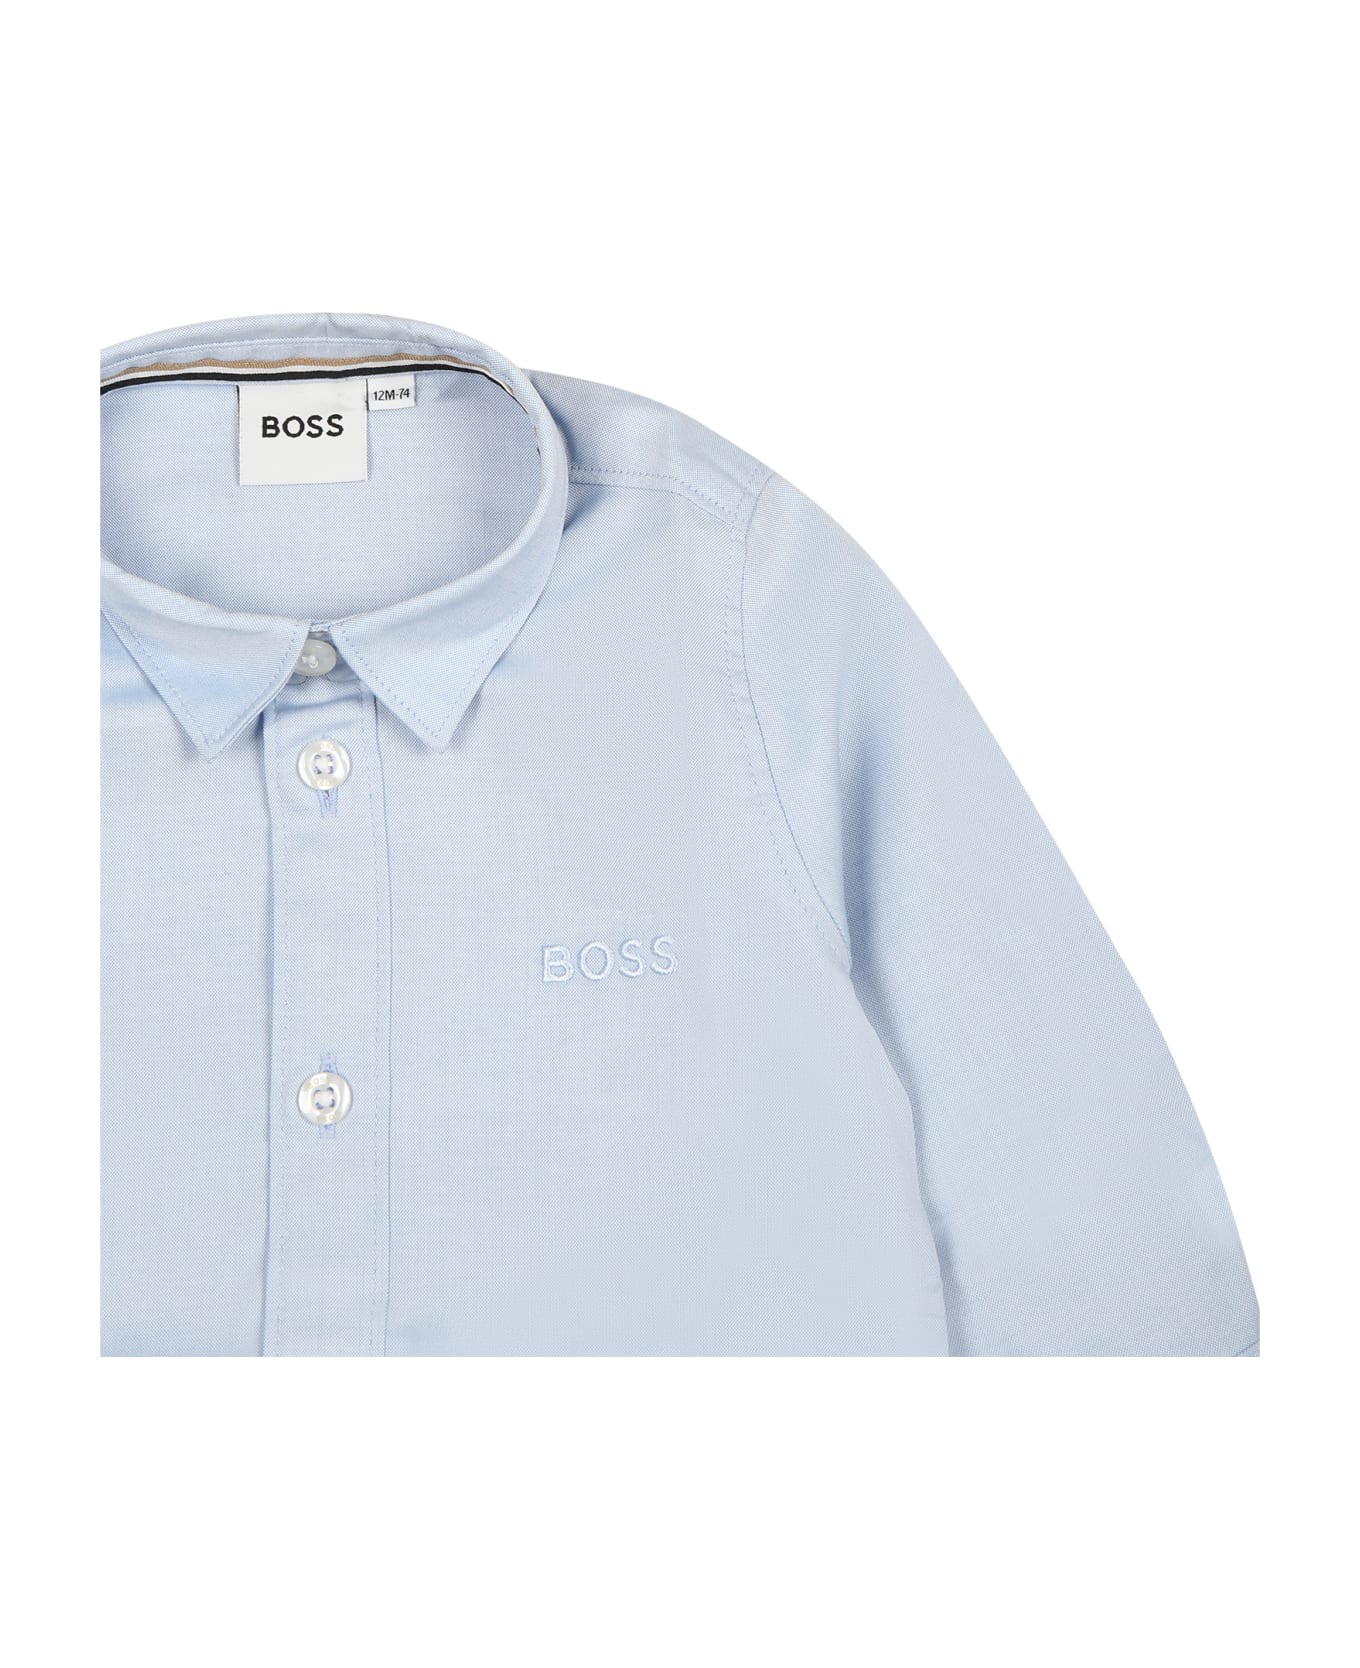 Hugo Boss Light Blue Shirt For Baby Boy With Logo - Light Blue